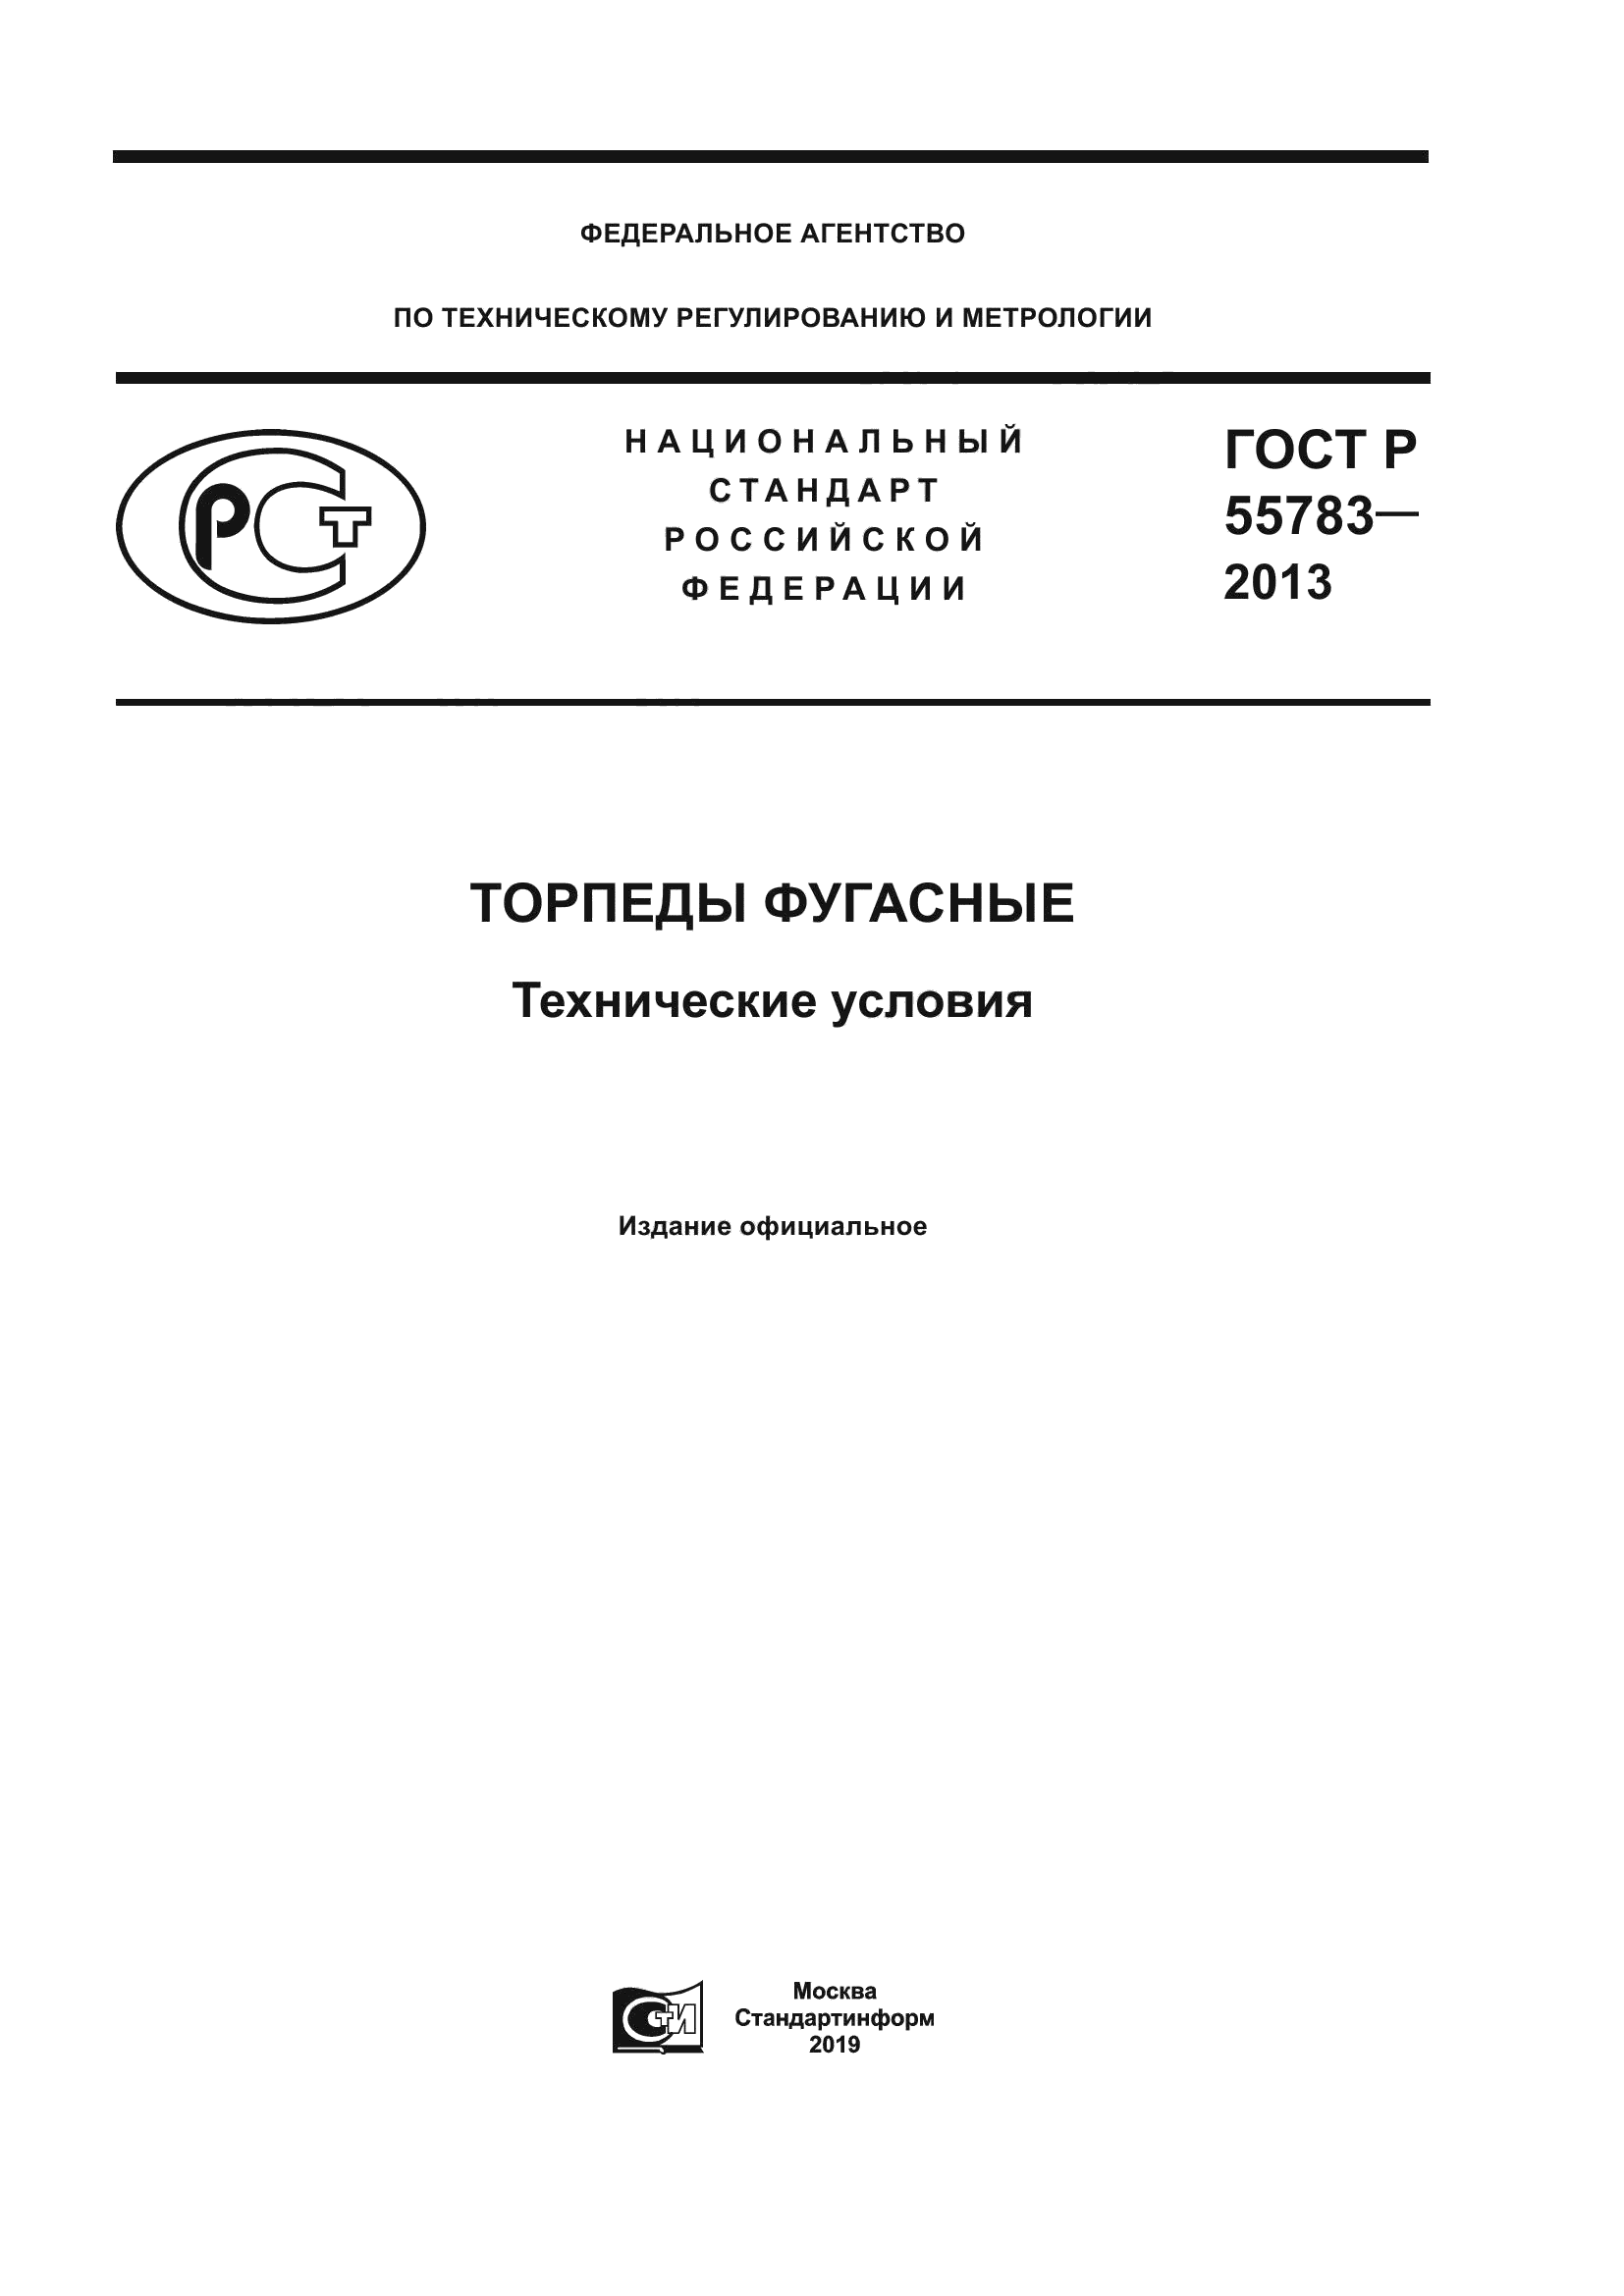 ГОСТ Р 55783-2013